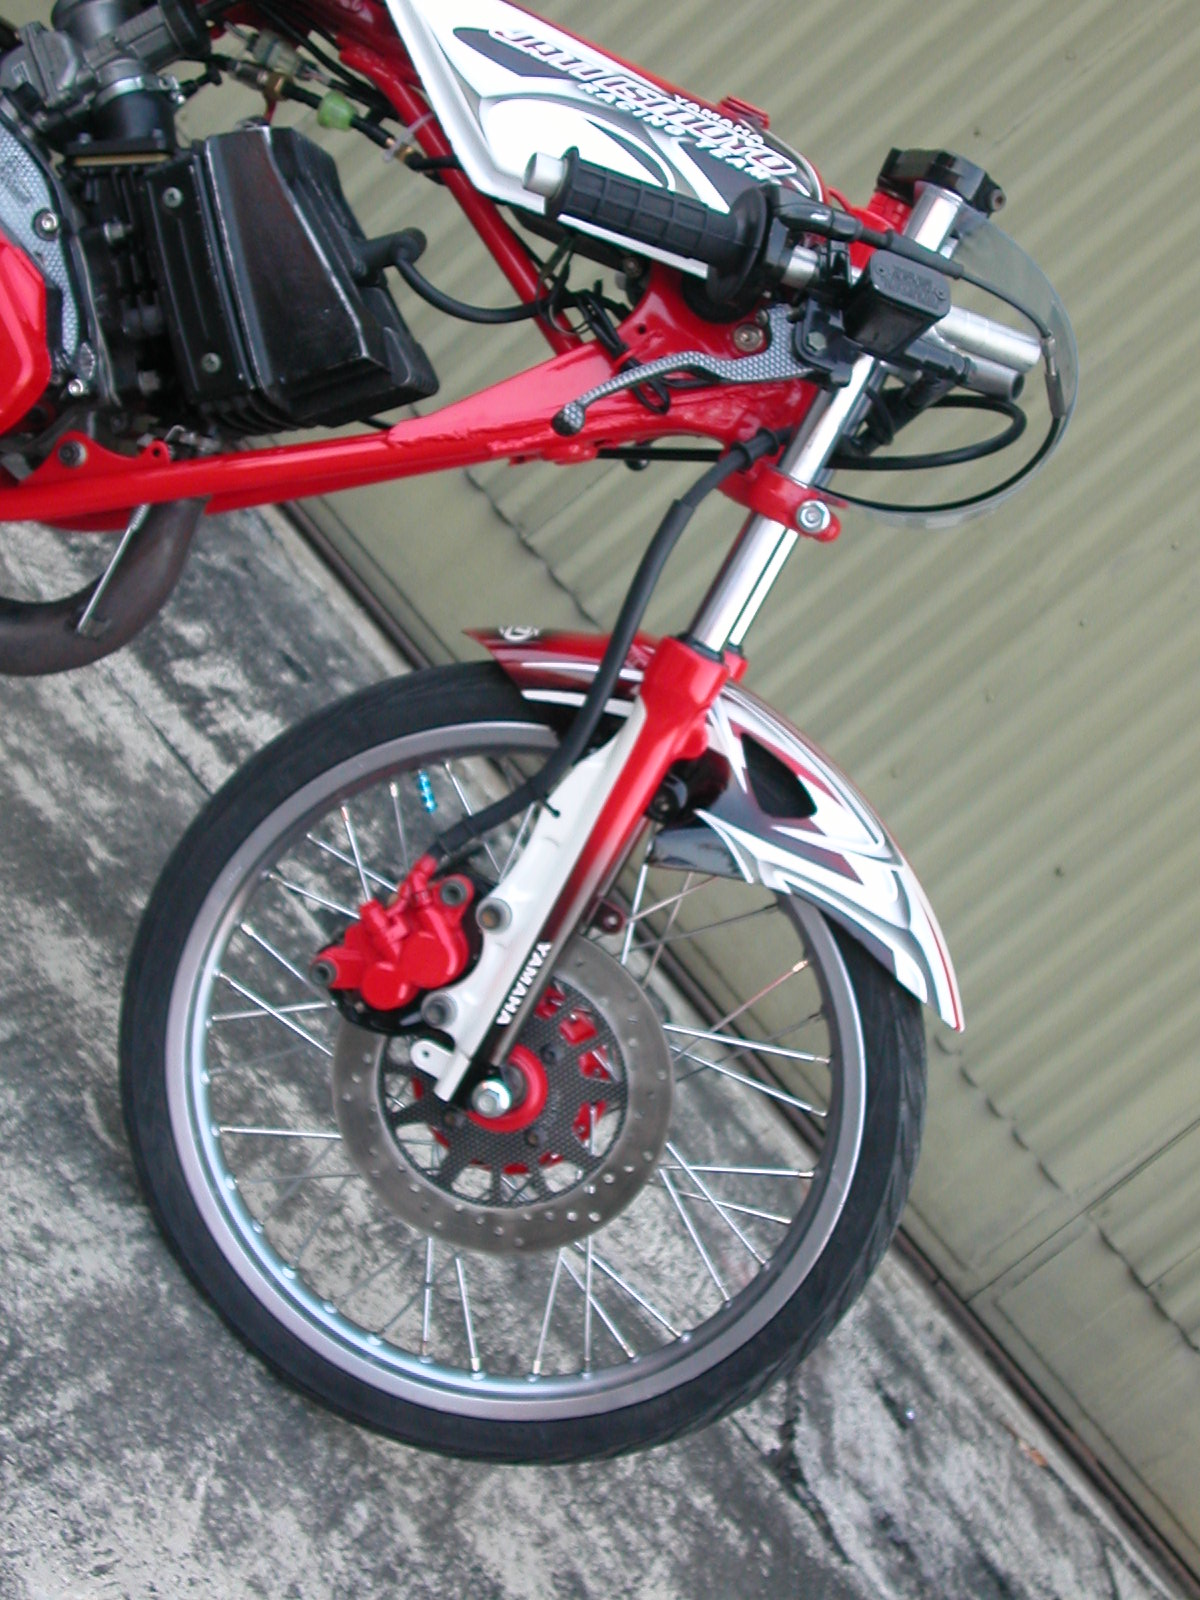 yamaha rx 135 hd wallpapers,land vehicle,vehicle,spoke,bicycle wheel,bicycle part